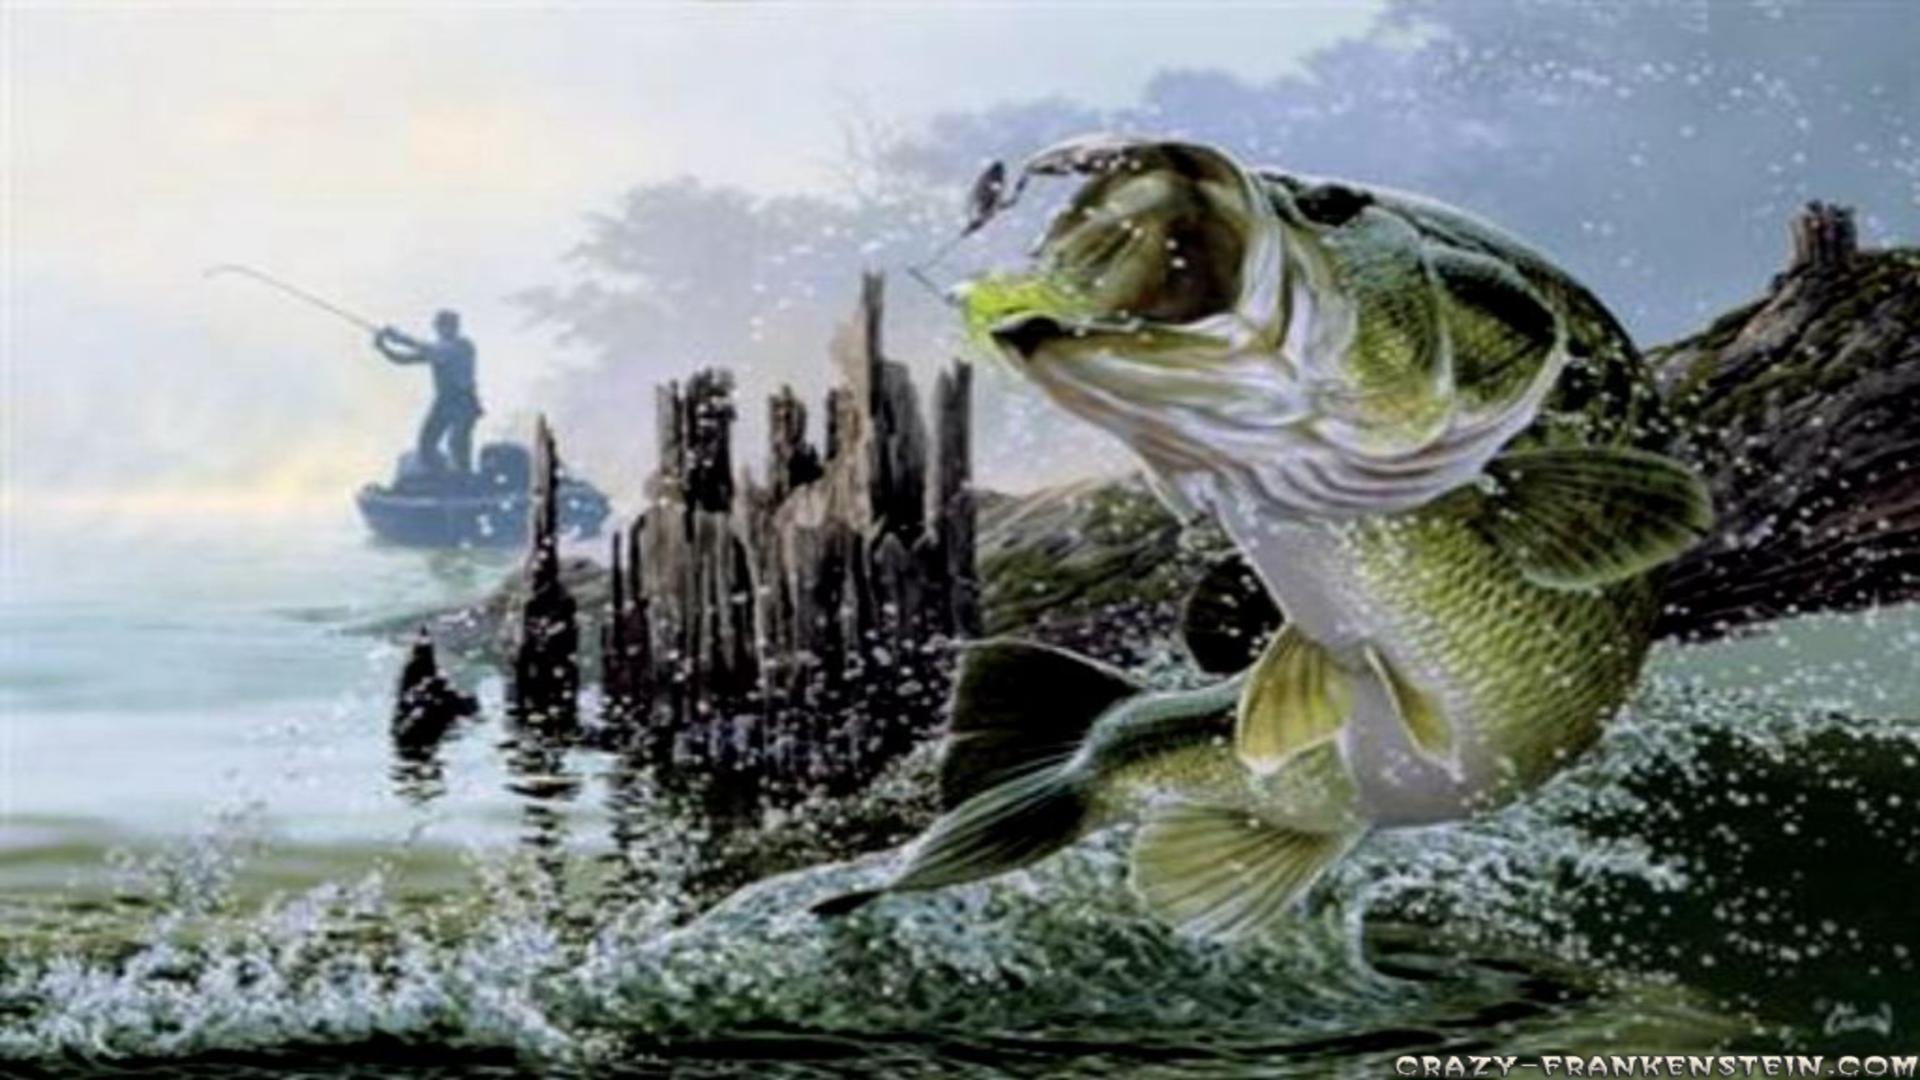 bass fishing wallpaper hd,grüne meeresschildkröte,schildkröte,meeresschildkröte,reptil,fisch